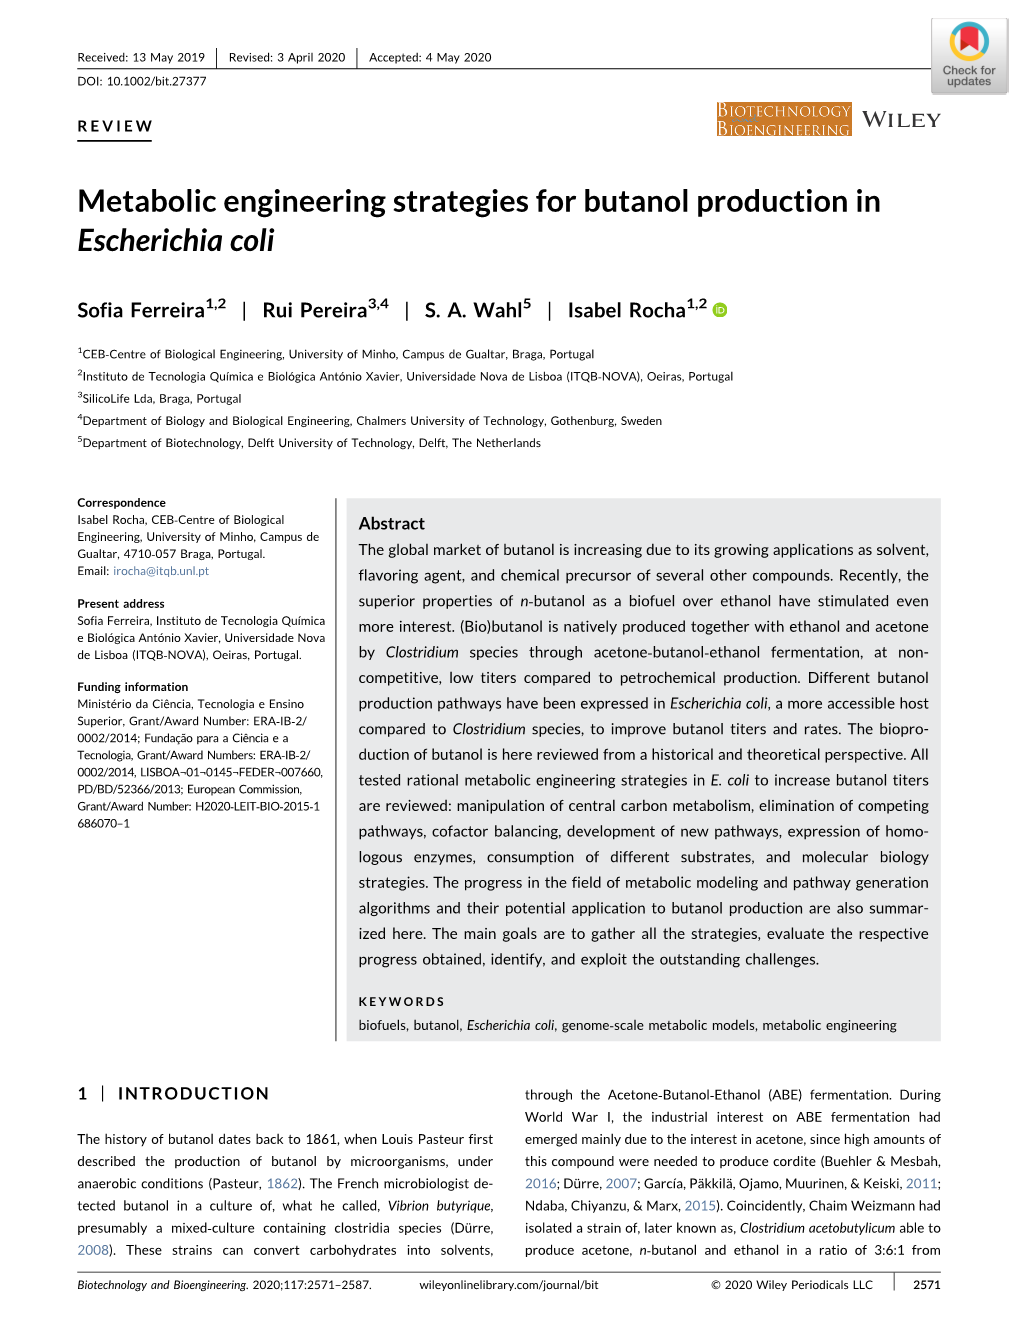 Metabolic Engineering Strategies for Butanol Production in Escherichia Coli